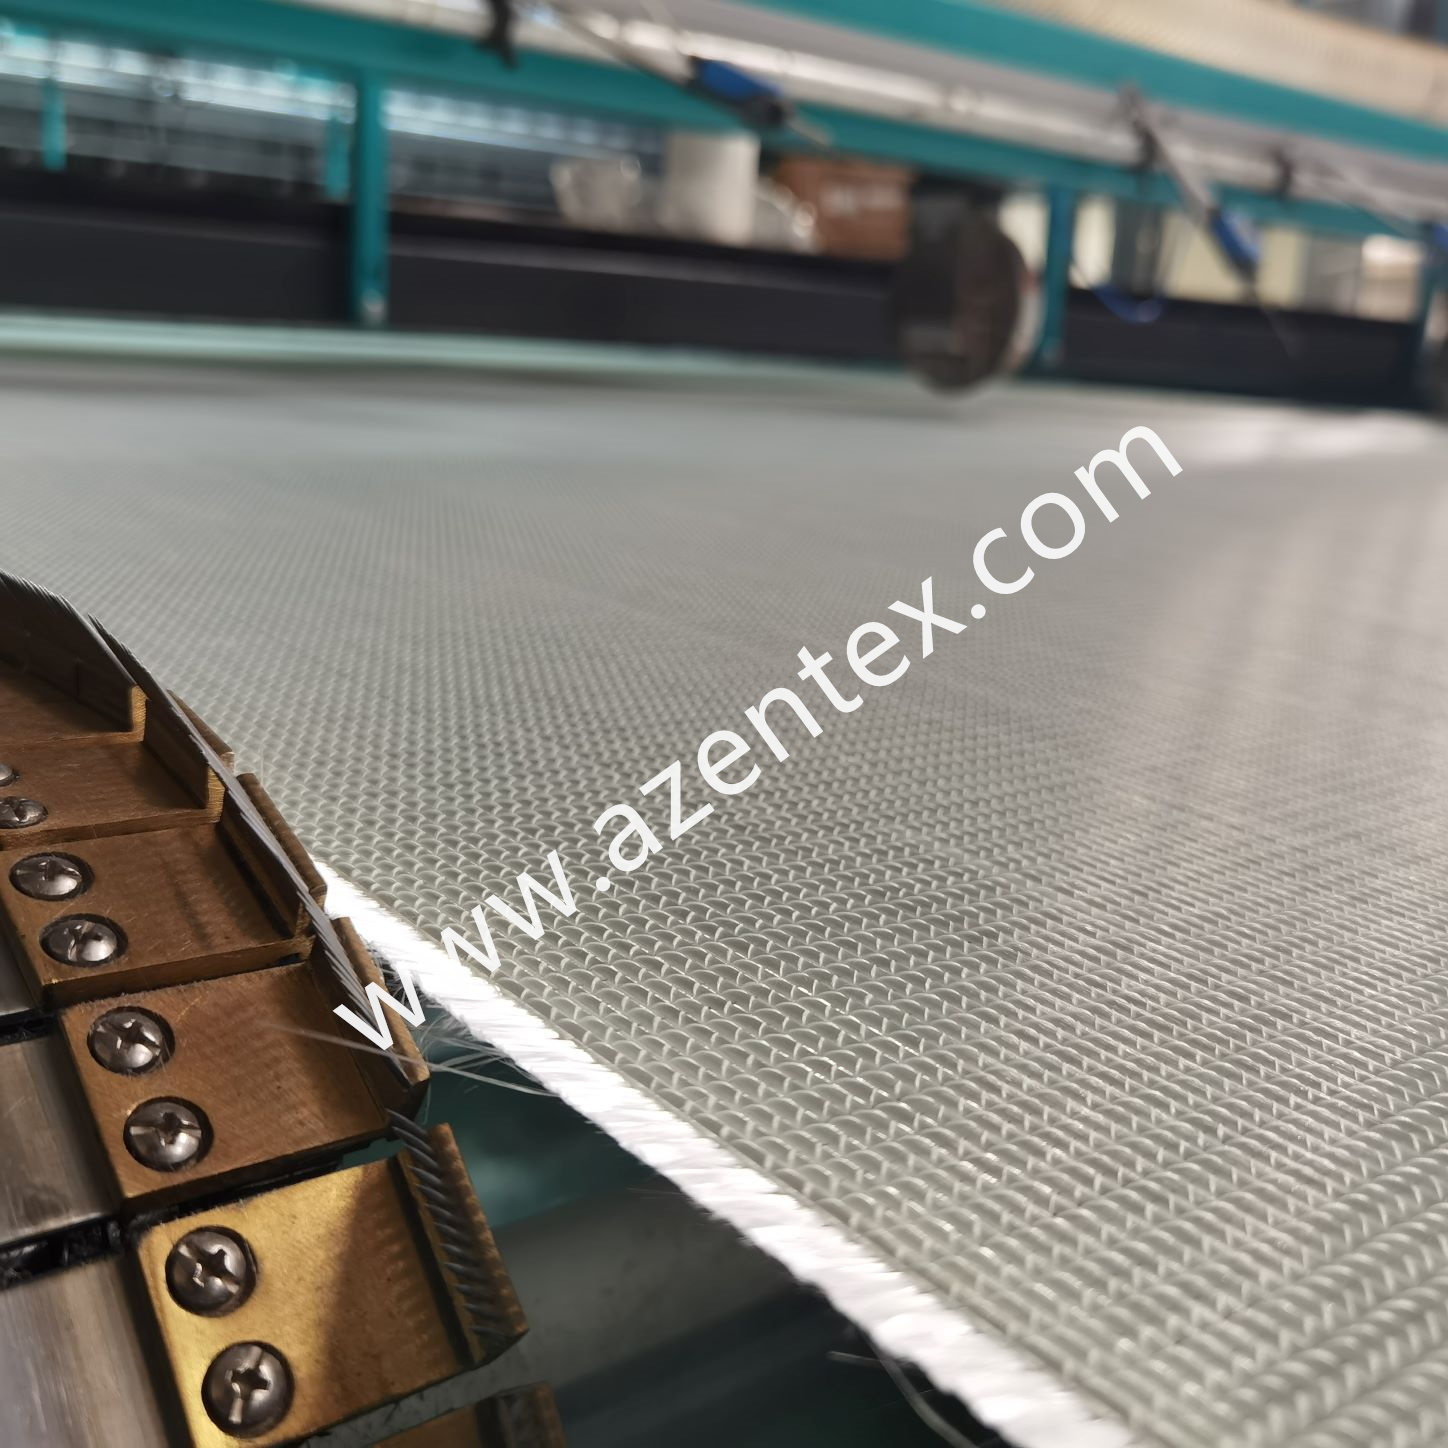 biaxial weft-insertion warp knitting machine fiberclass (14)